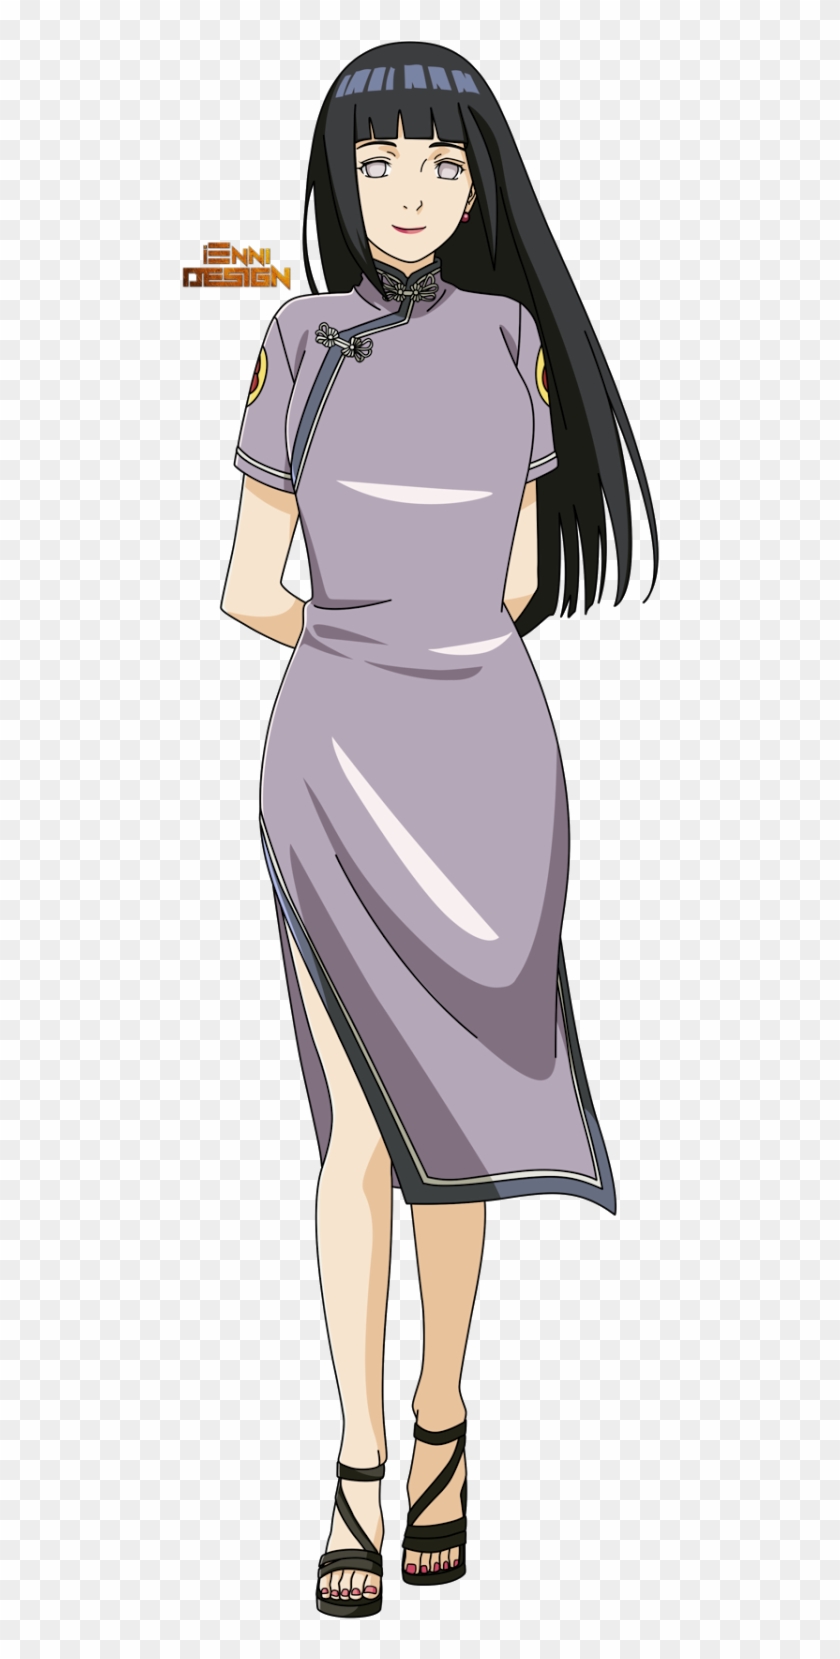 Chicas Sexis Del Anime - Naruto Shippuden Hinata Hyuga #1290239